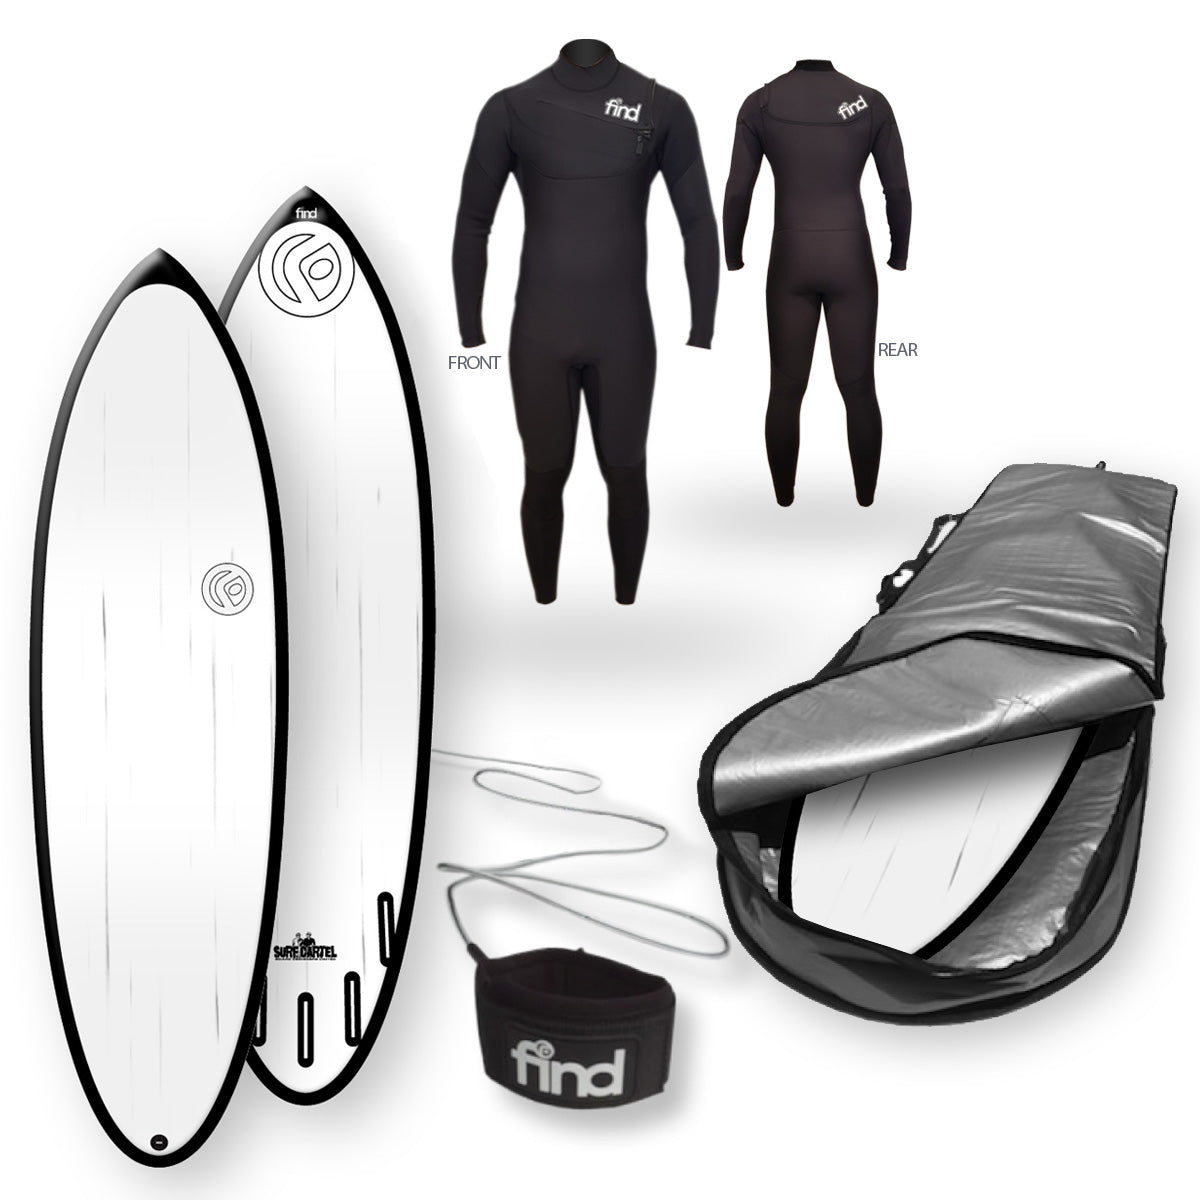 Find™ 60 Blitz Polytec Black Streaked Surfboard Fins Cover Leash Wetsuit Package - Default Title